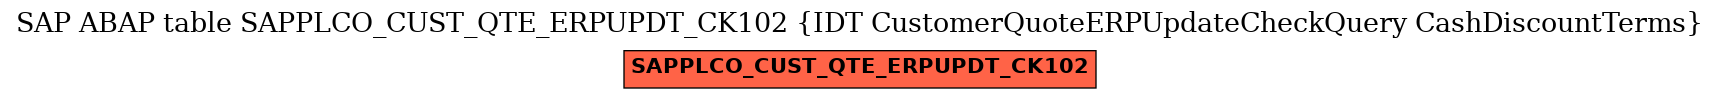 E-R Diagram for table SAPPLCO_CUST_QTE_ERPUPDT_CK102 (IDT CustomerQuoteERPUpdateCheckQuery CashDiscountTerms)